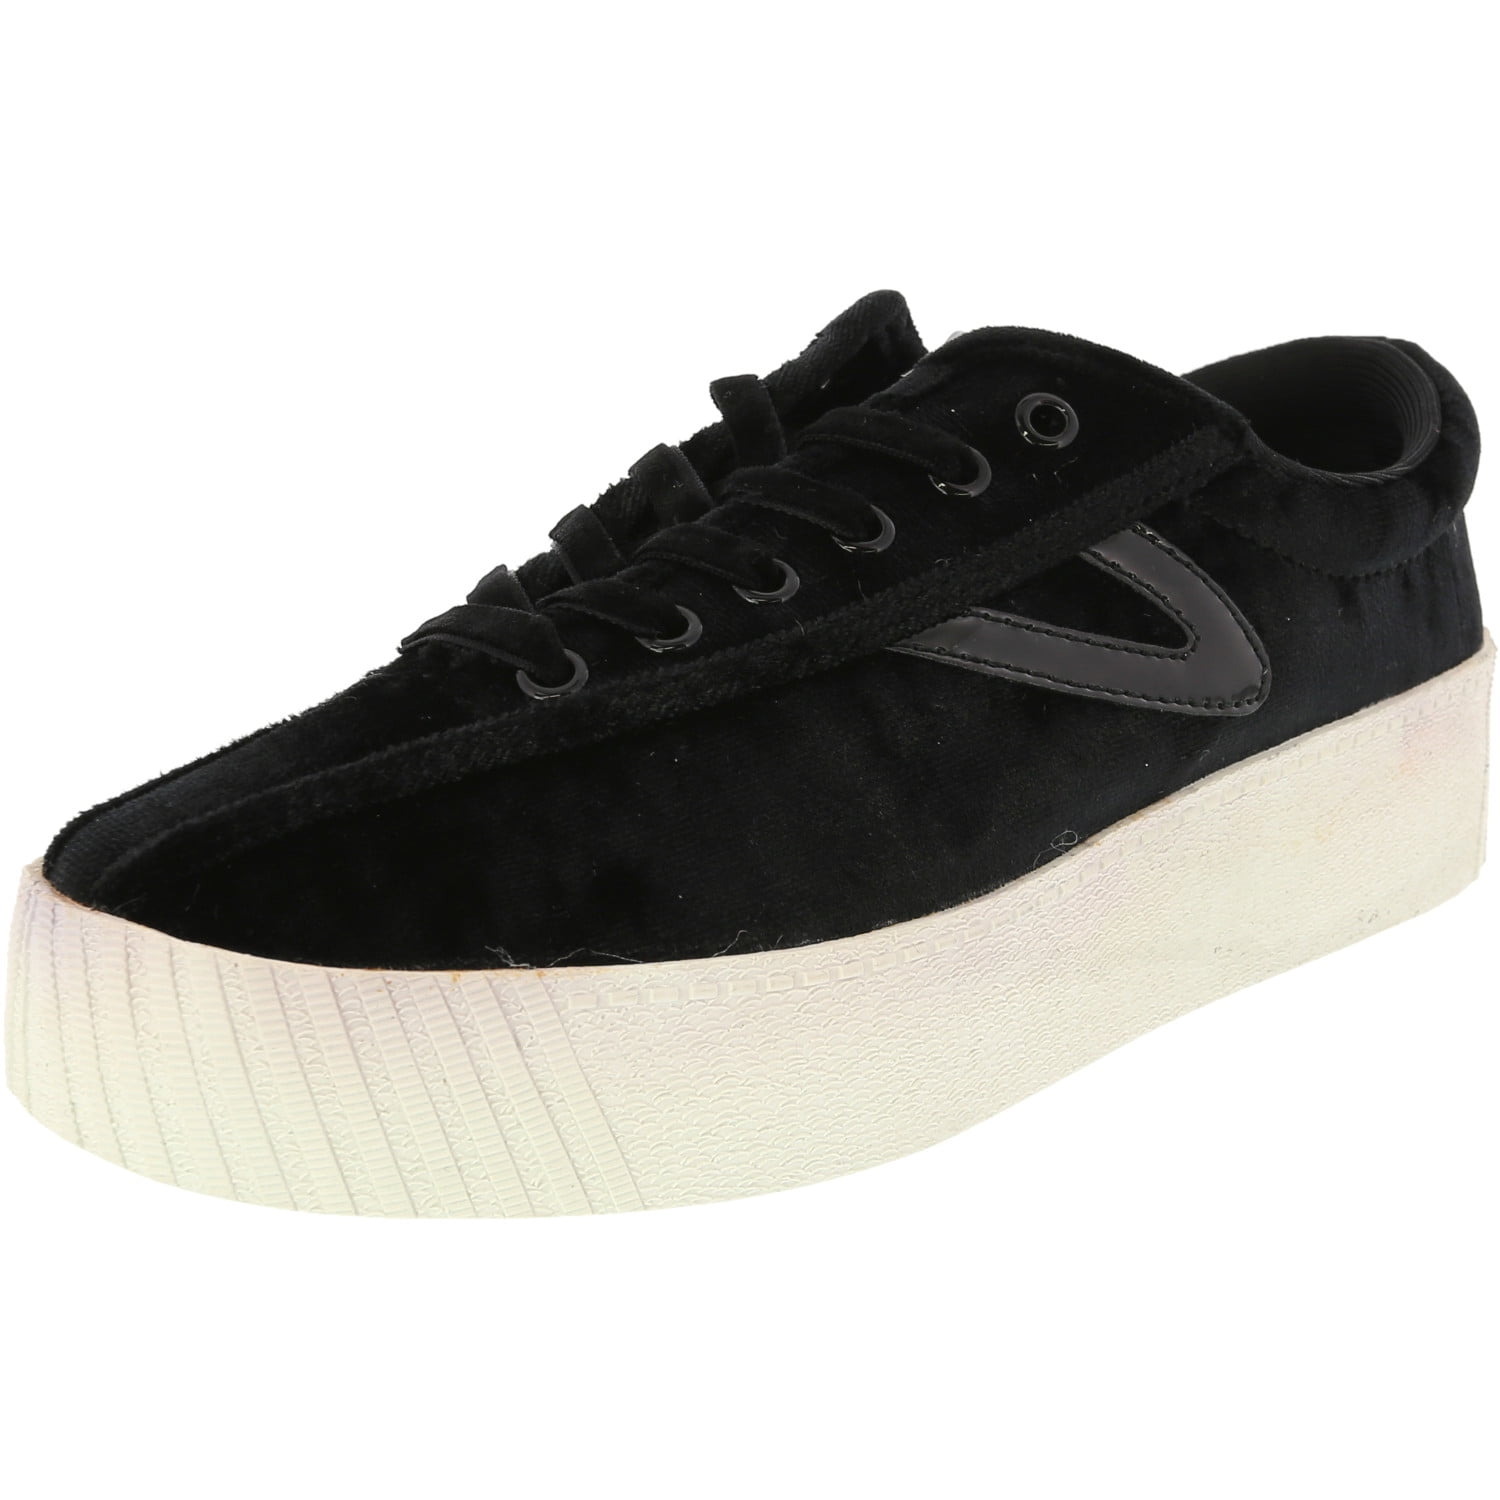 Tretorn Nylite 4 Bold Velvet Fashion Sneaker - 4.5M - Black / Black ...